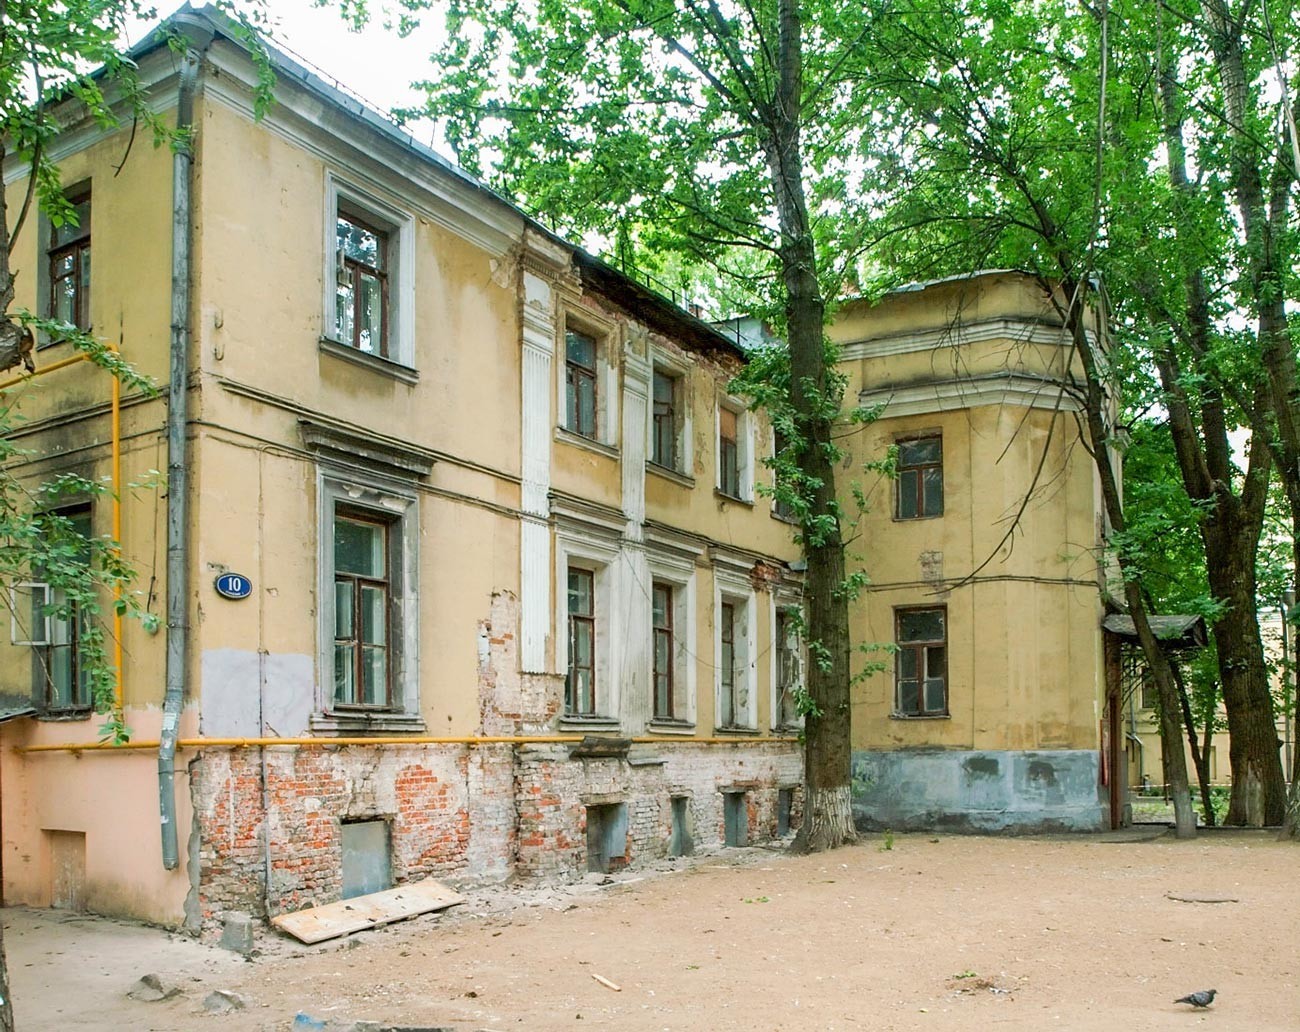 Palača družine Golicin v Krivokolennem pereulku.
